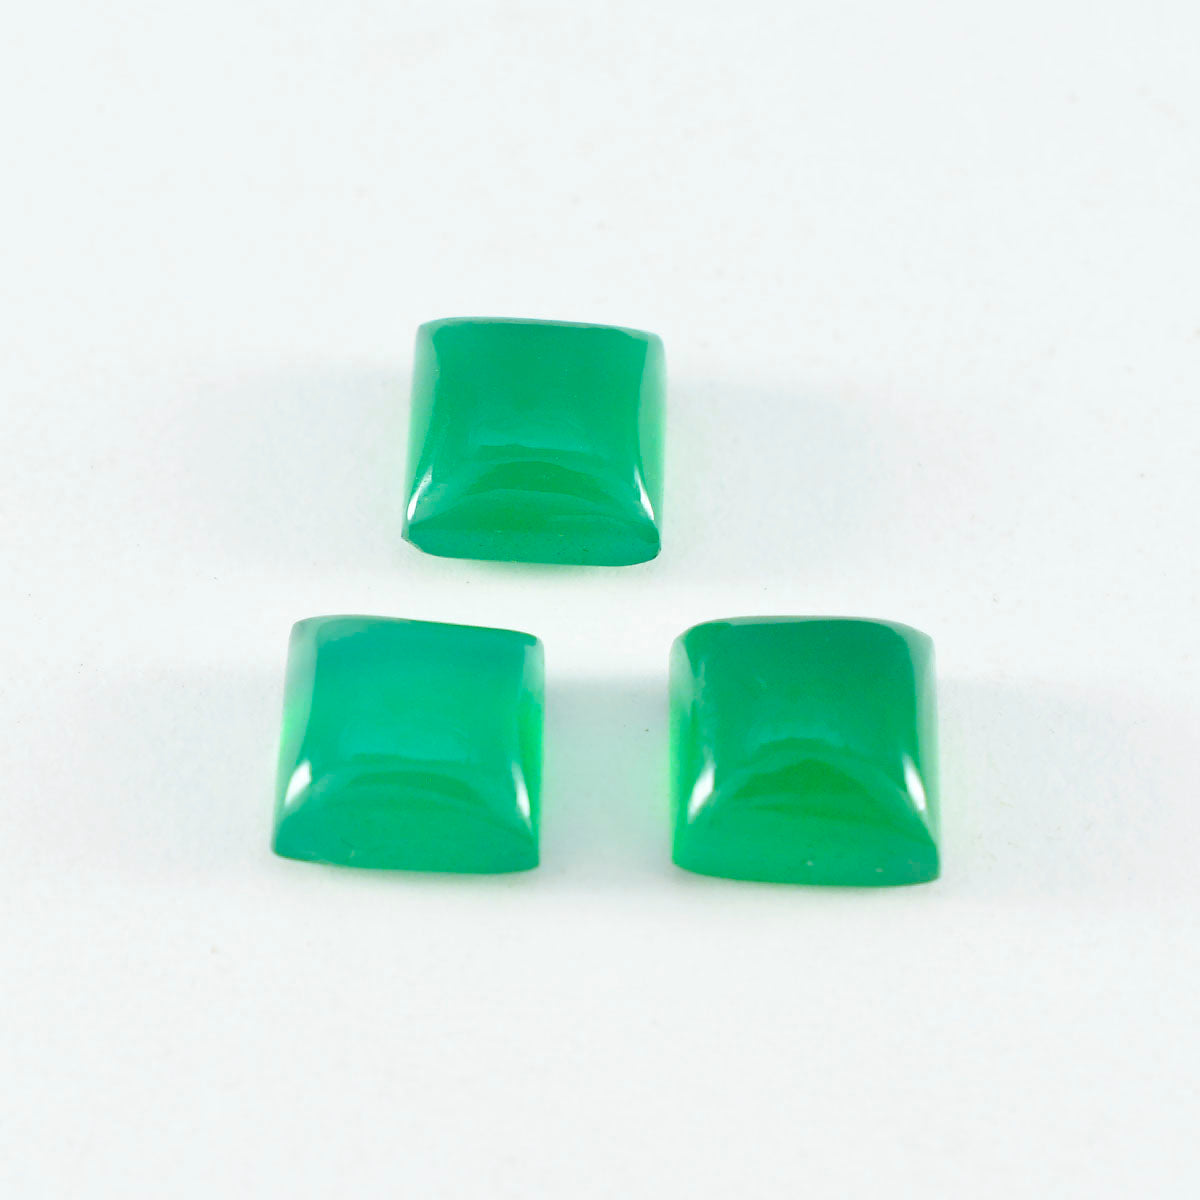 Riyogems 1PC Green Onyx Cabochon 9x9 mm Square Shape attractive Quality Gem